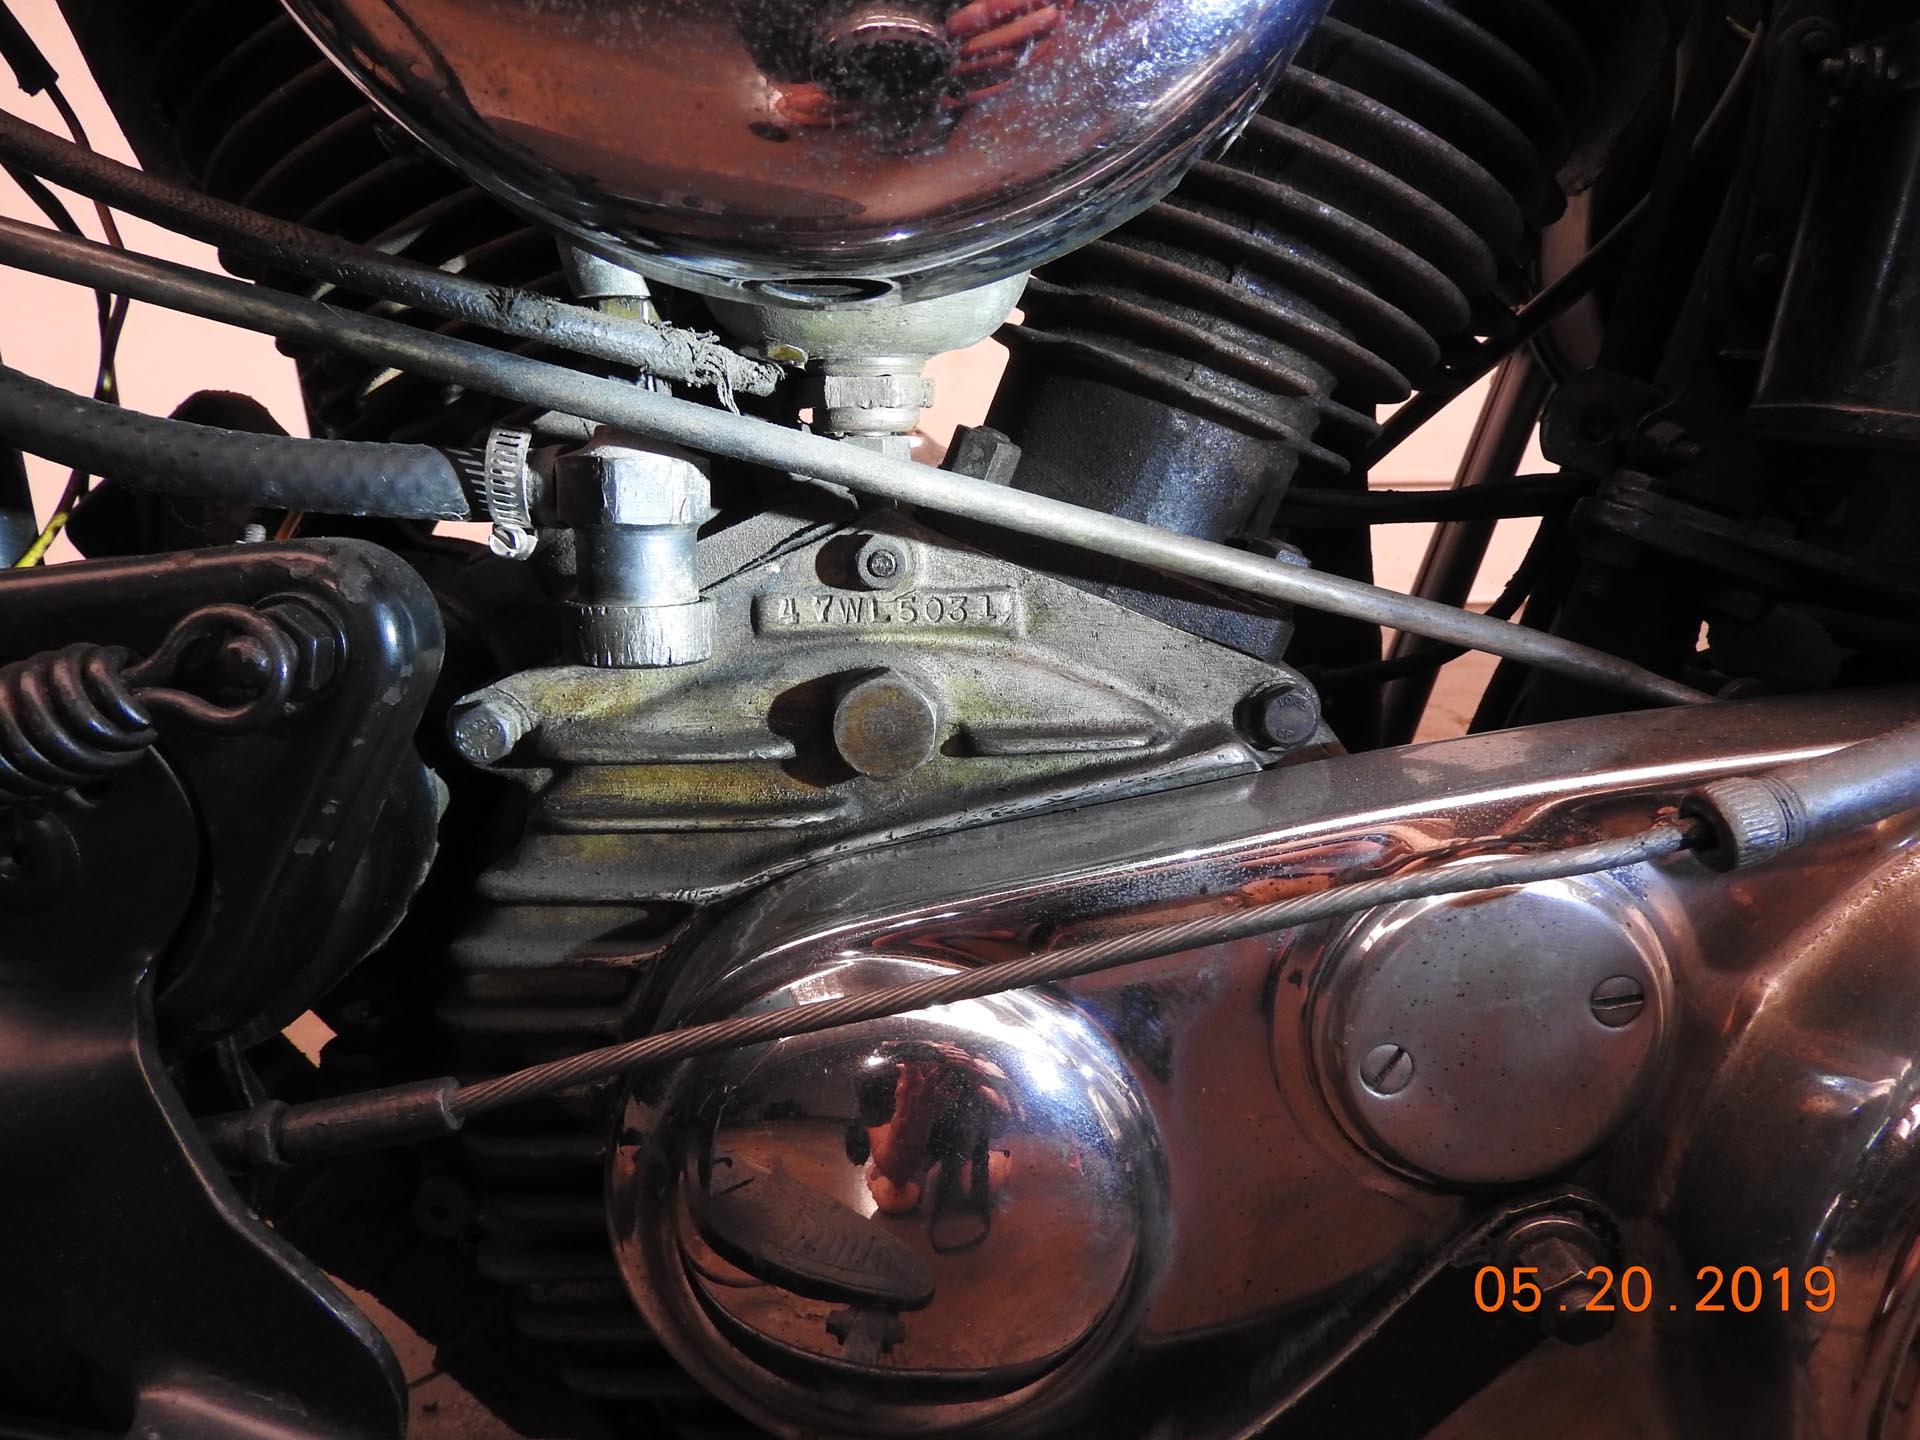 1947 Harley-Davidson WCA